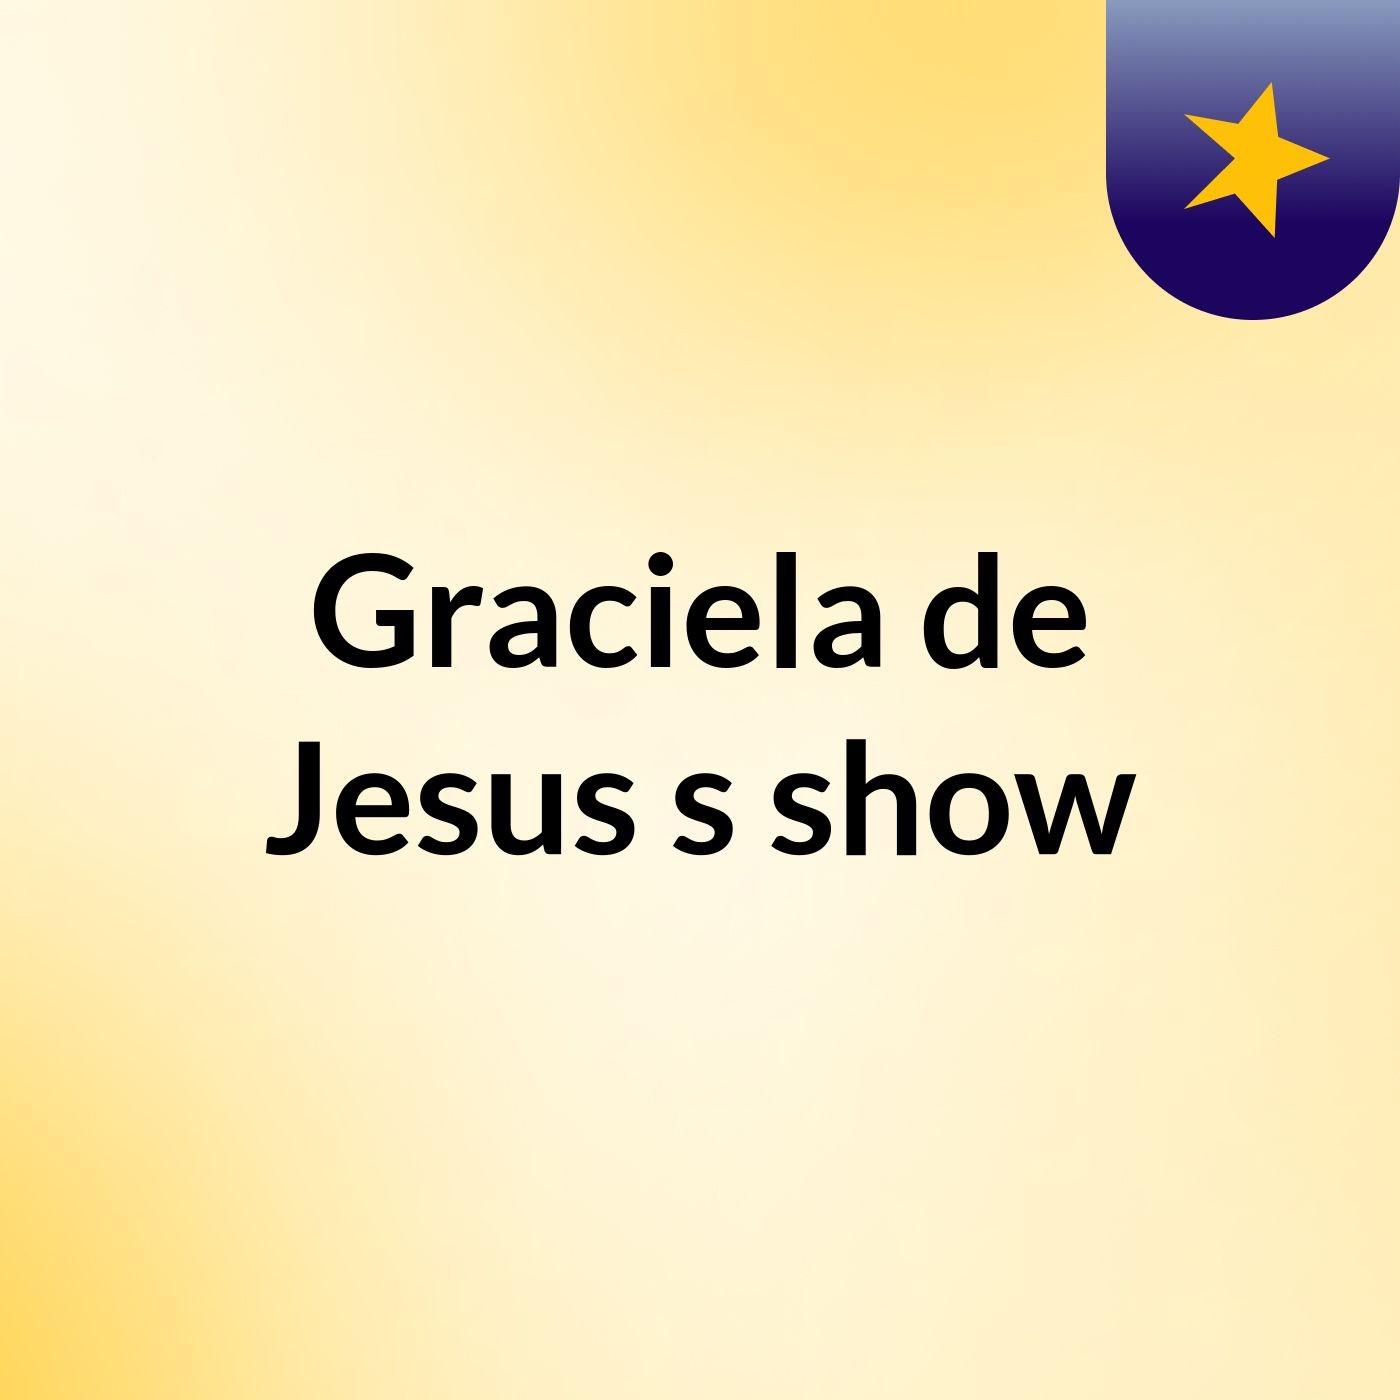 Graciela de Jesus's show